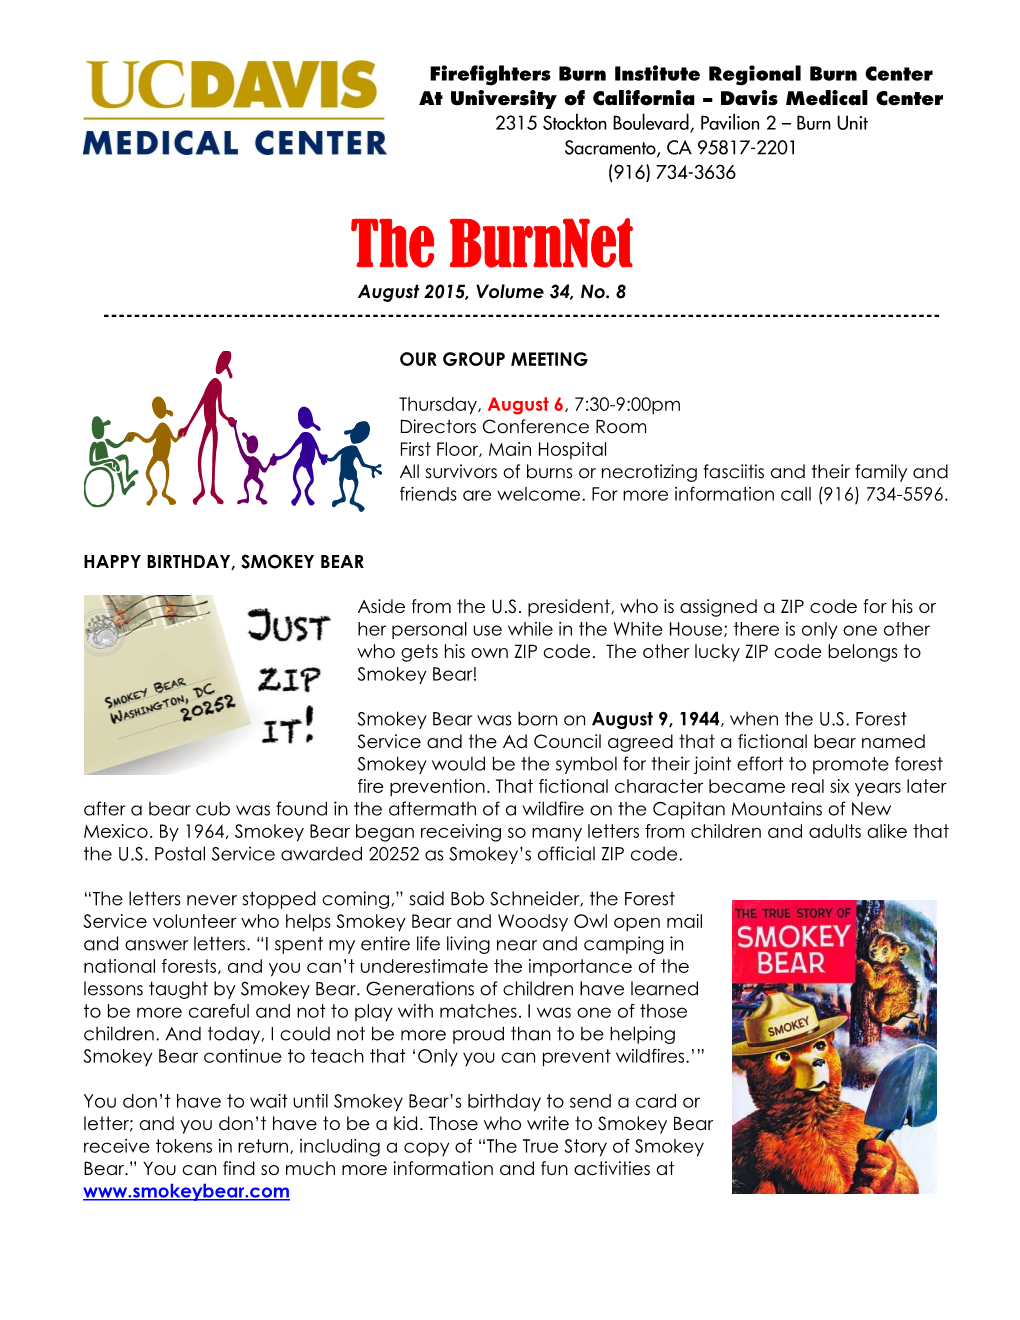 The Burnnet August 2015, Volume 34, No